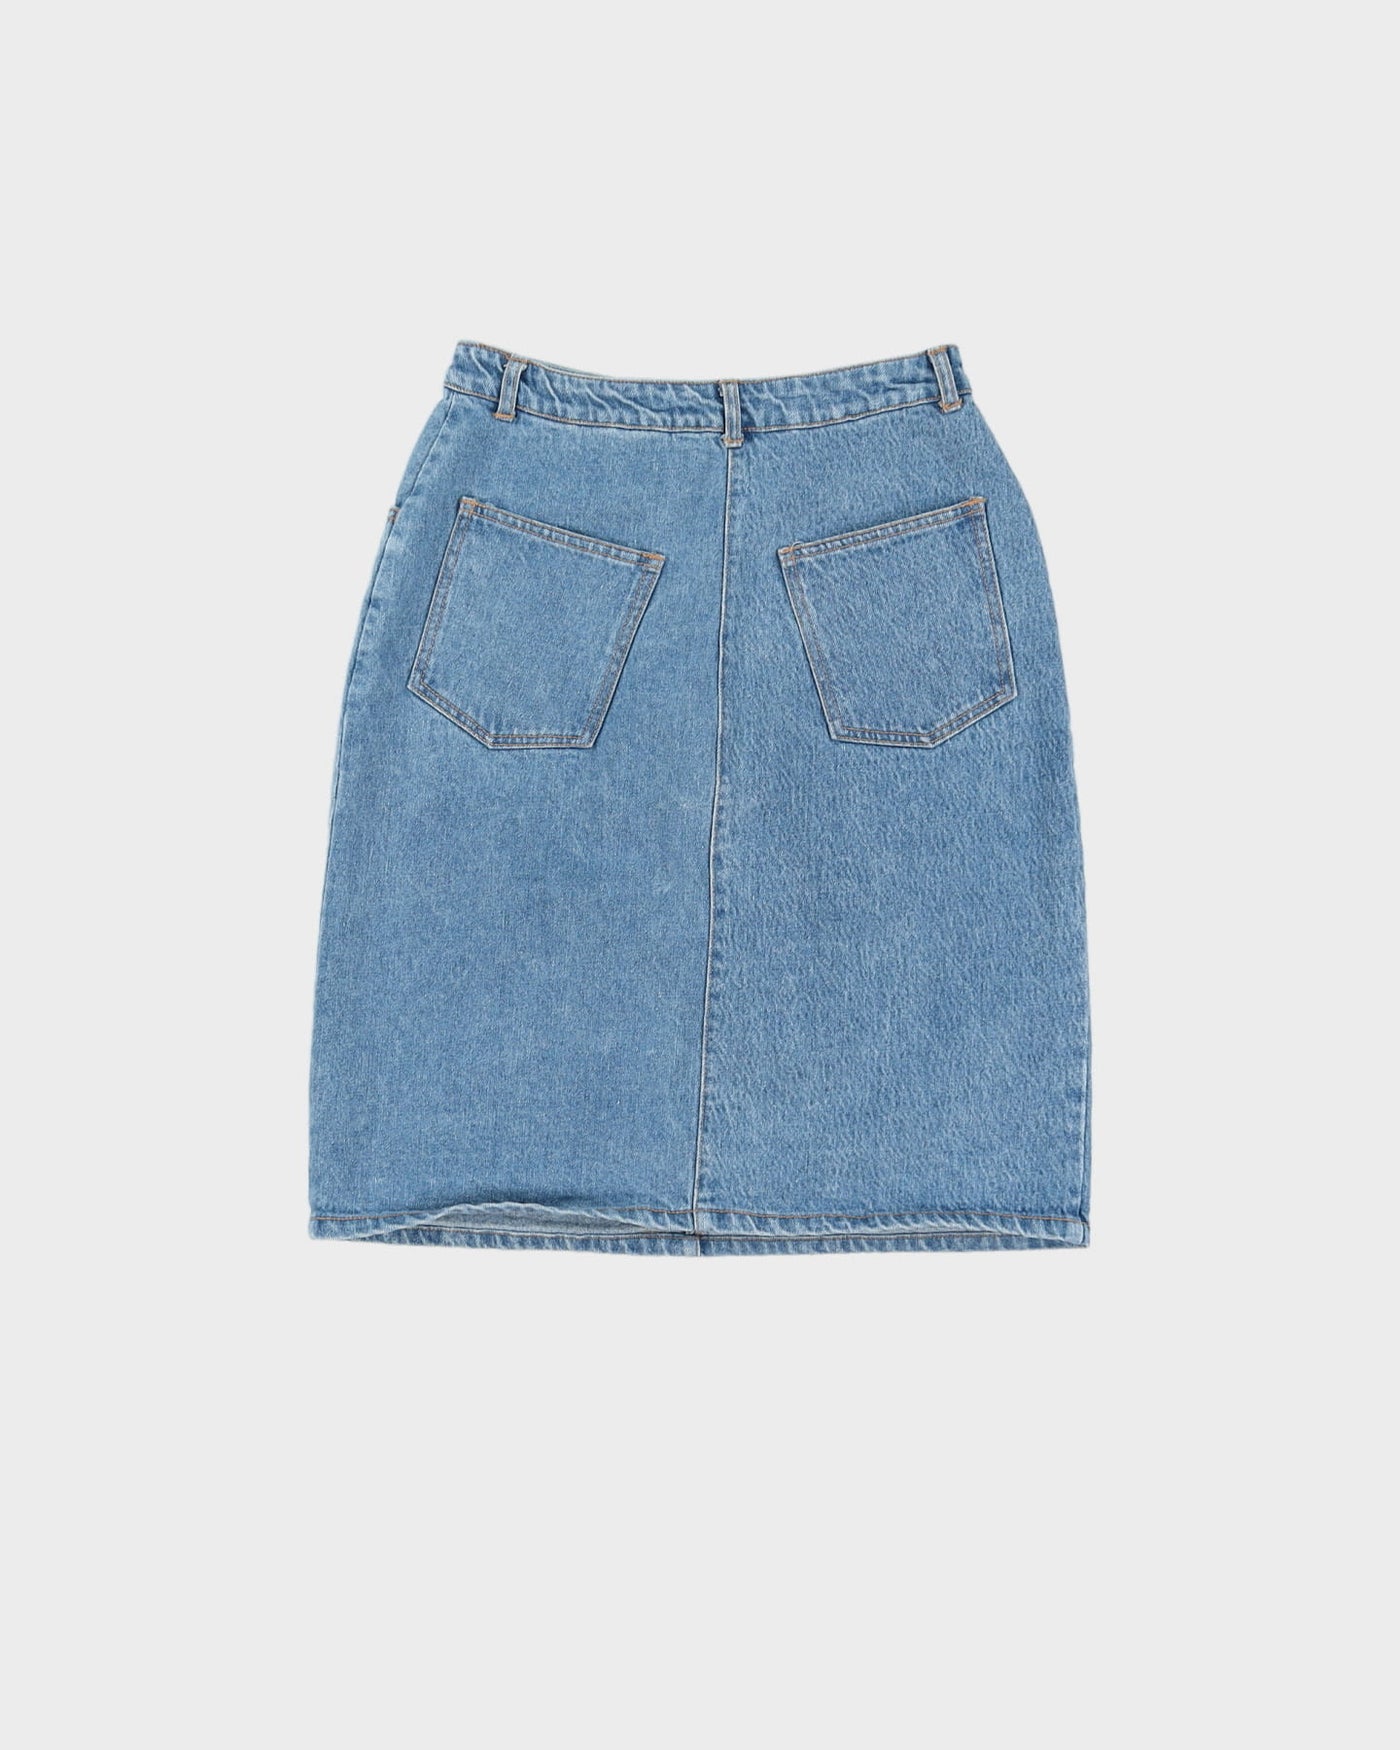 Blue Denim Pencil Skirt - S